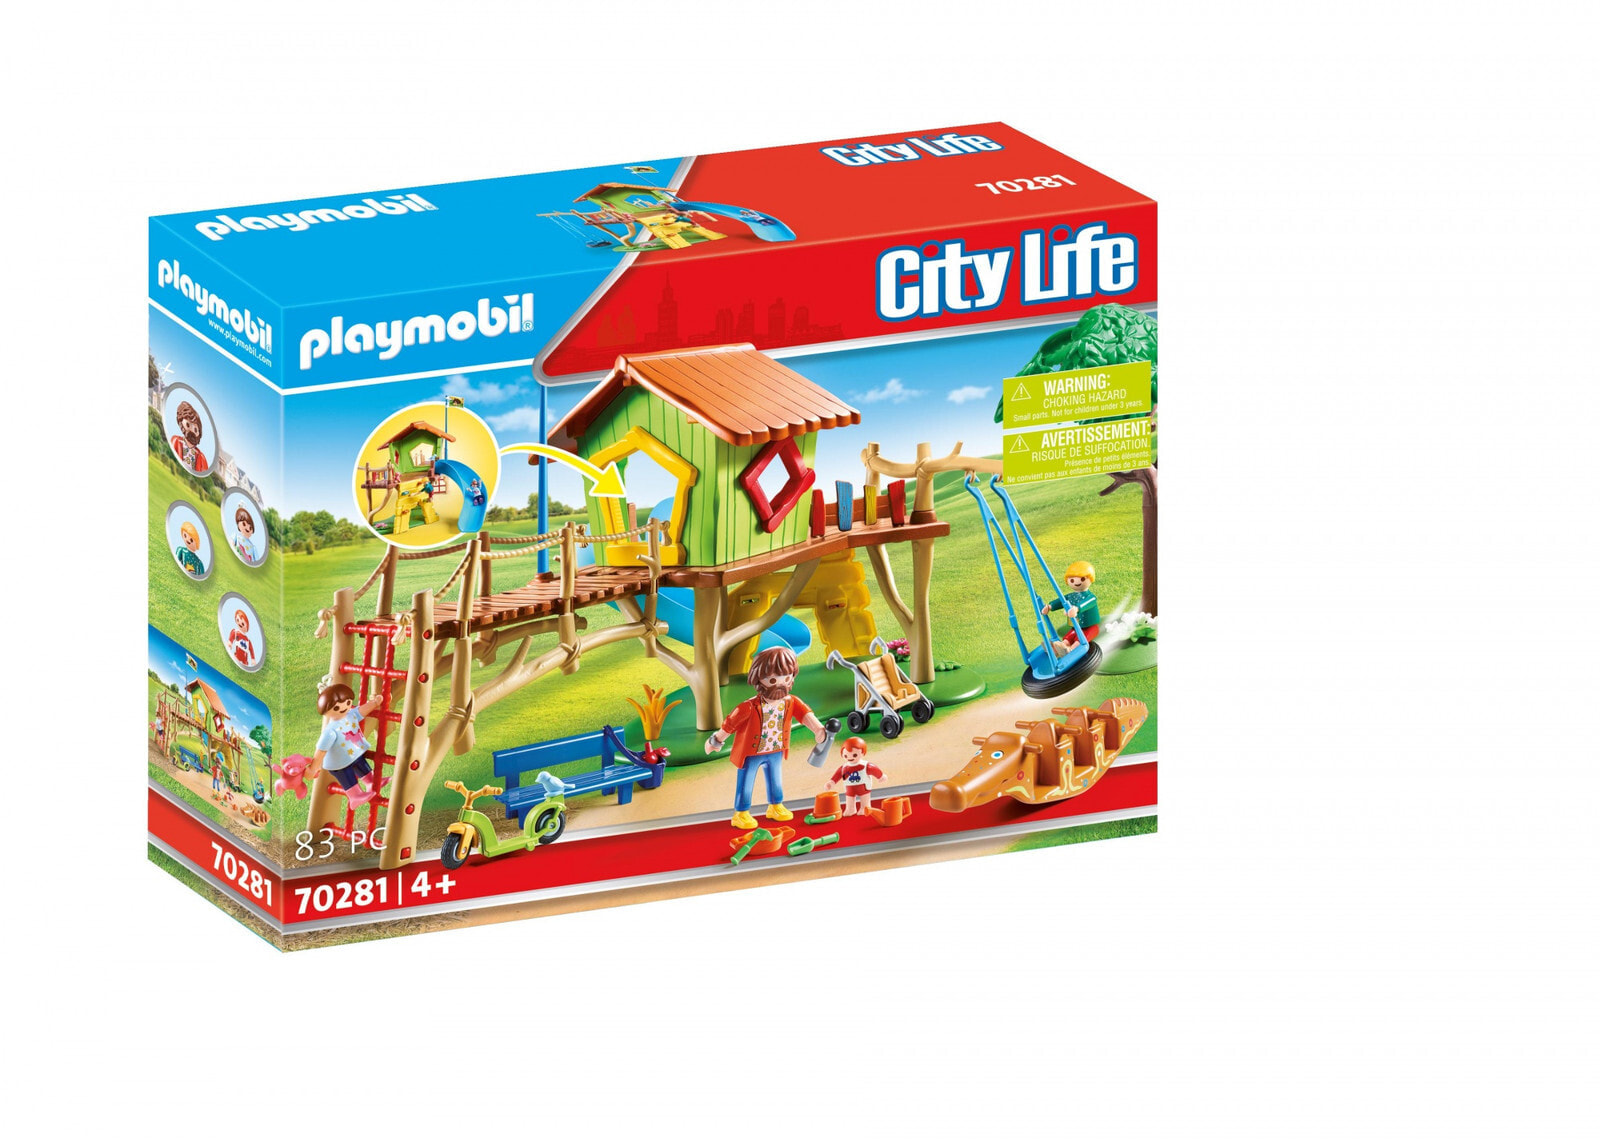 Playmobil City Life 70281 набор детских фигурок